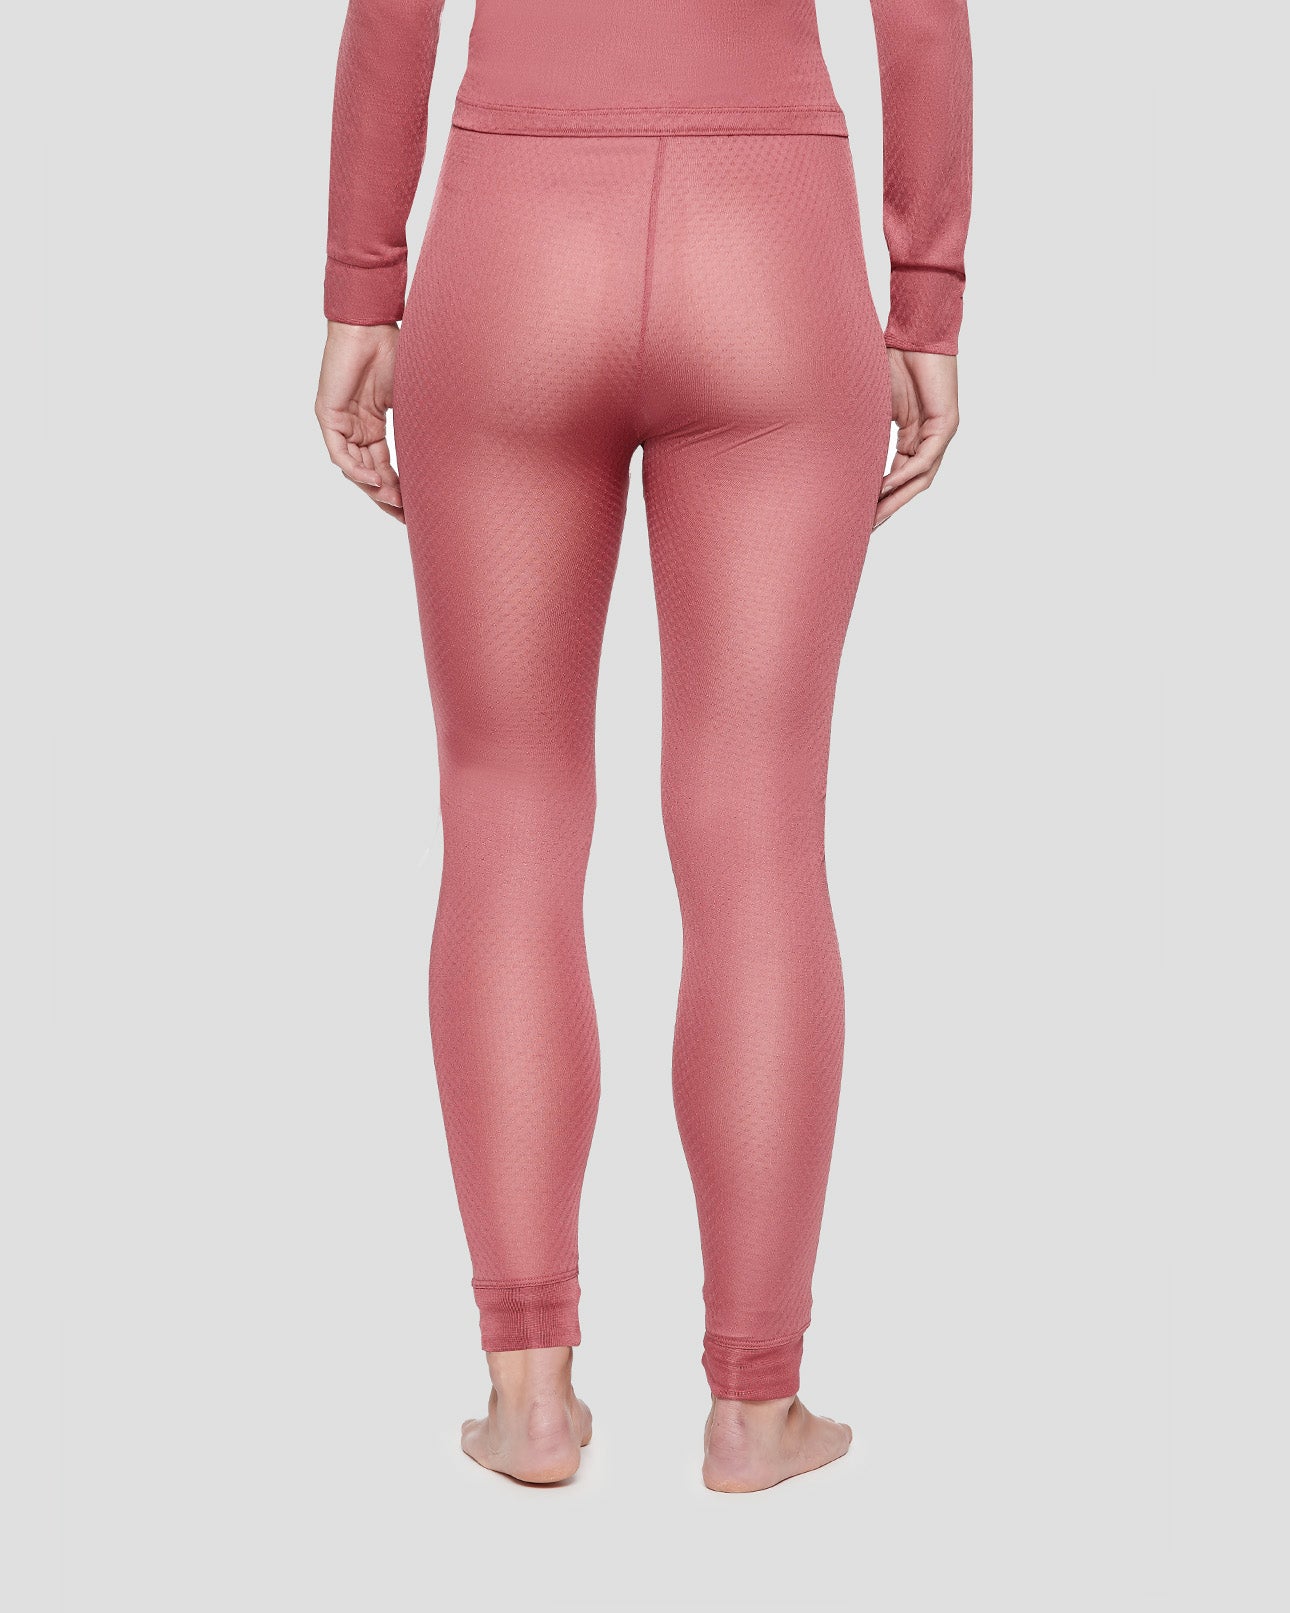 100% Silk Thermasilk Long Underwear Pants Leggings Blush Pink